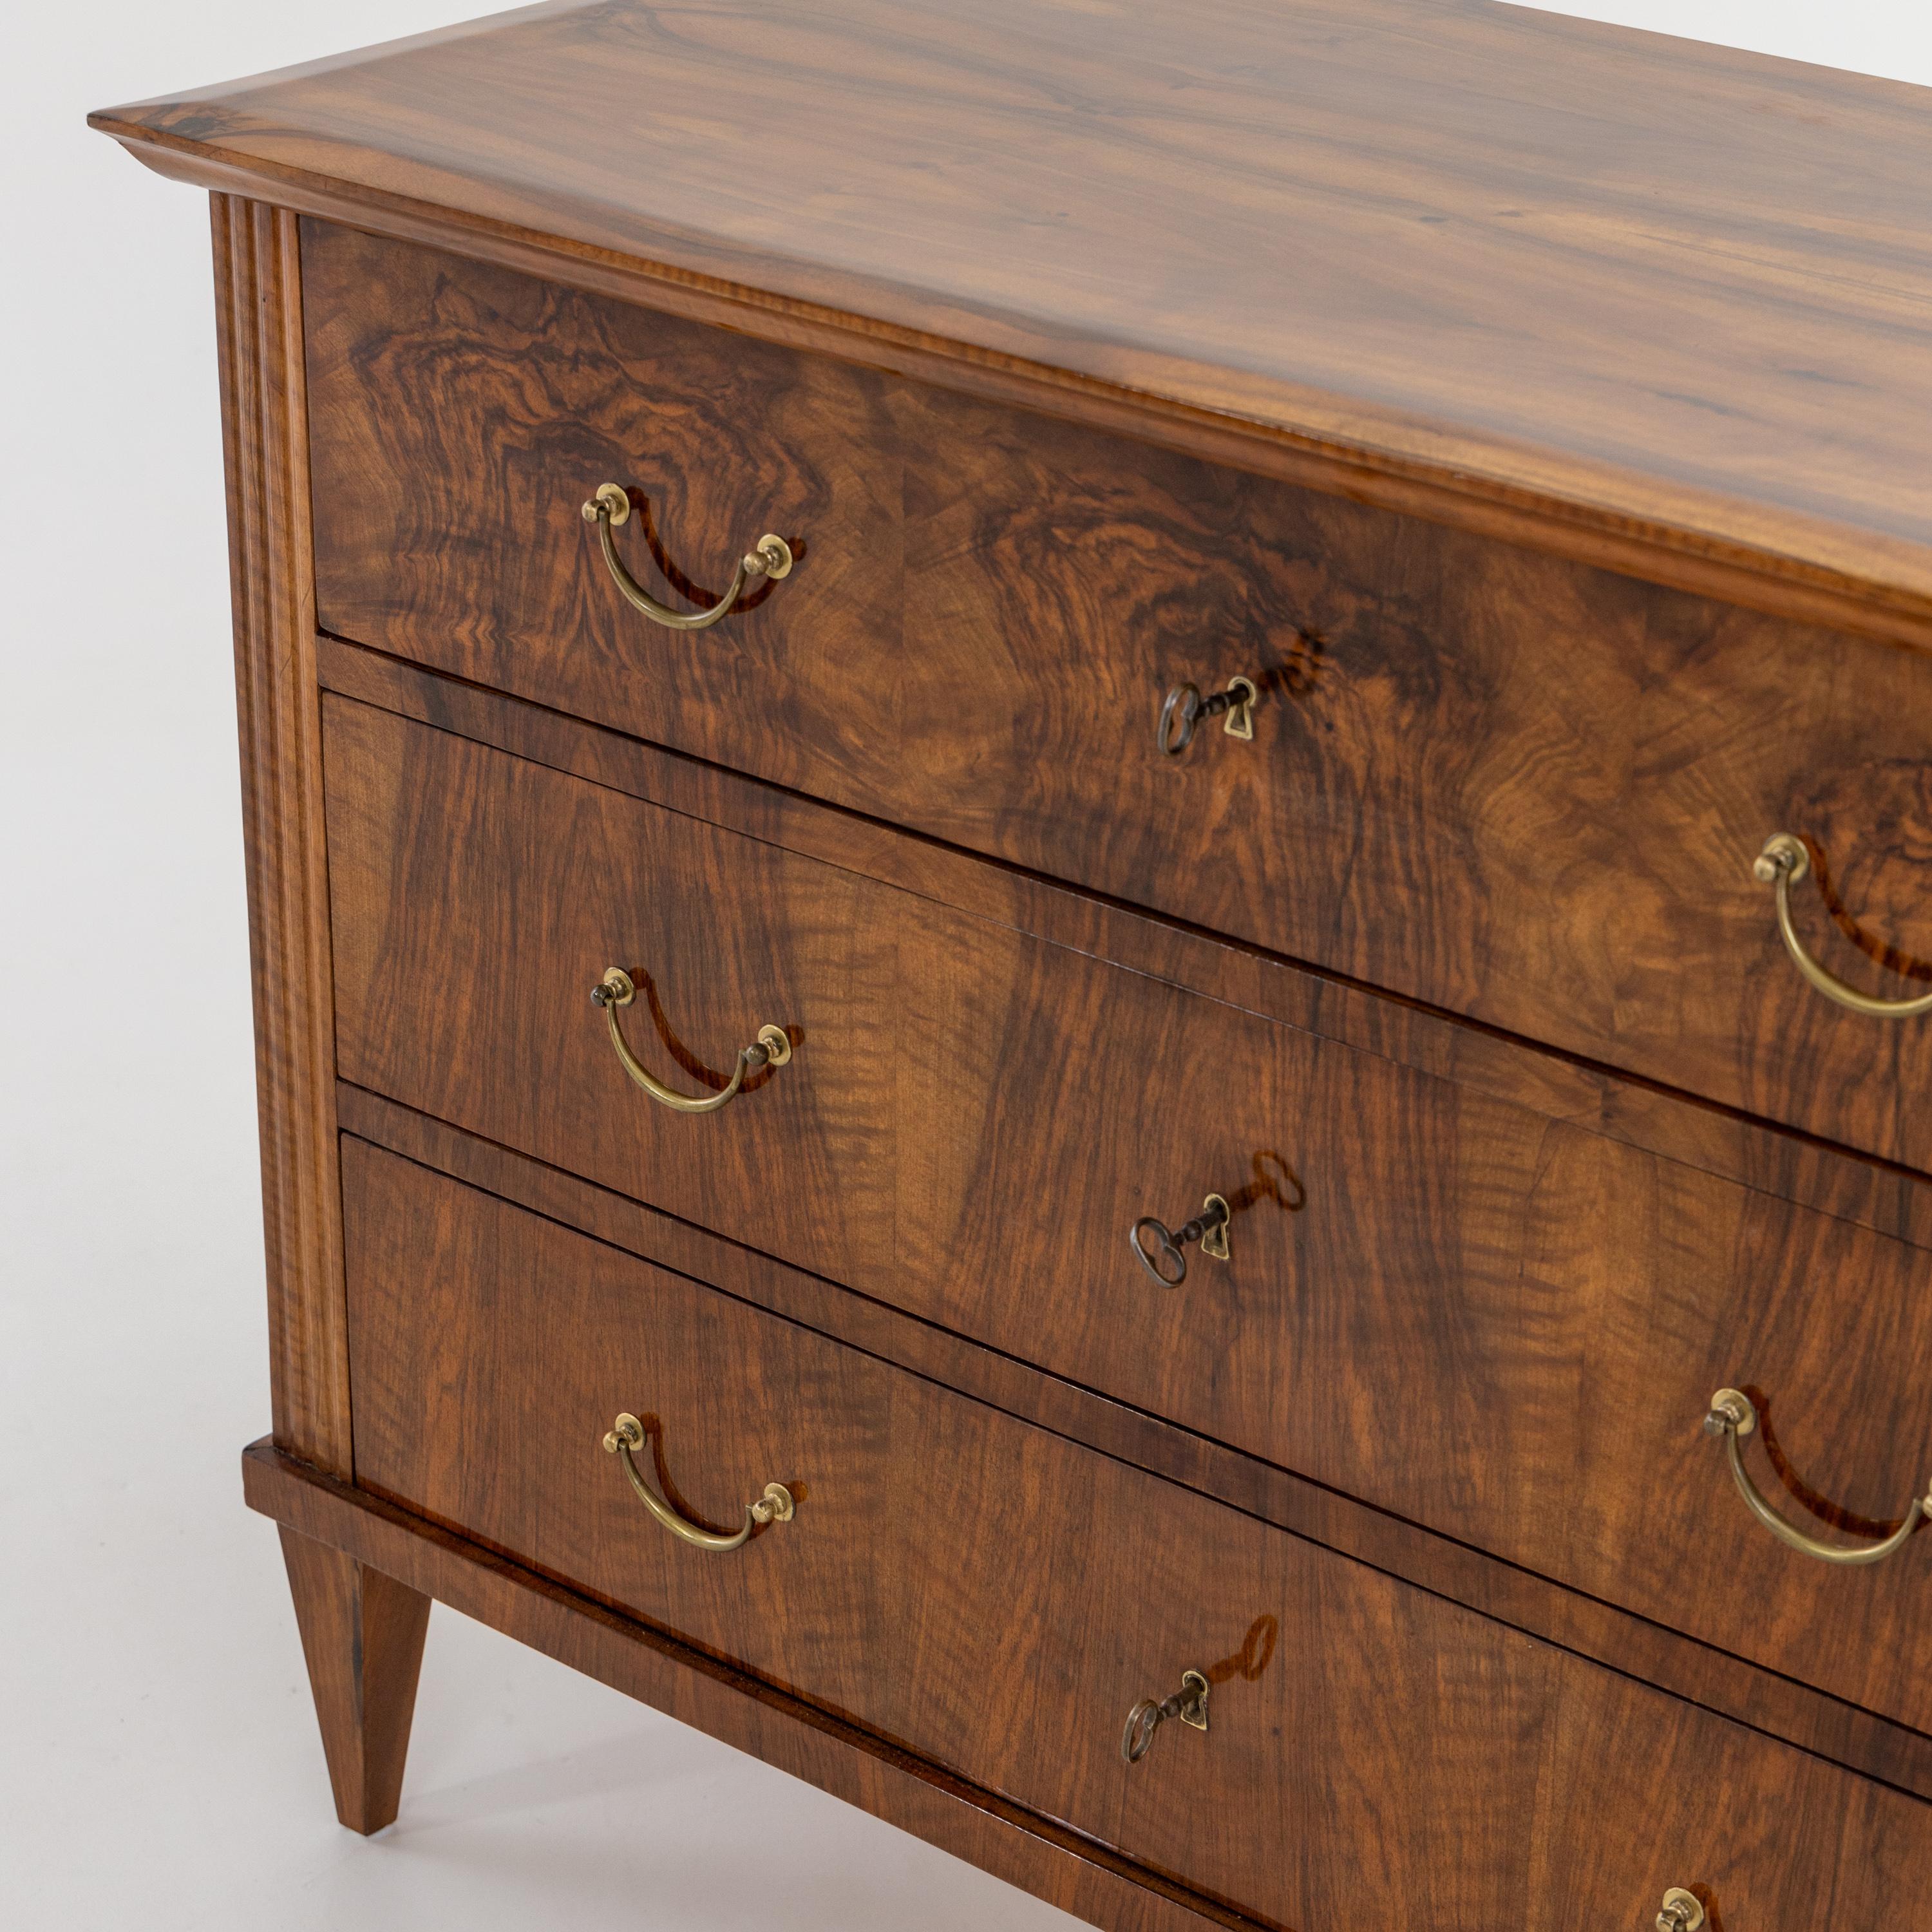 Fine Biedermeier single chest of three drawers.
Walnut with patinated brass pulls.